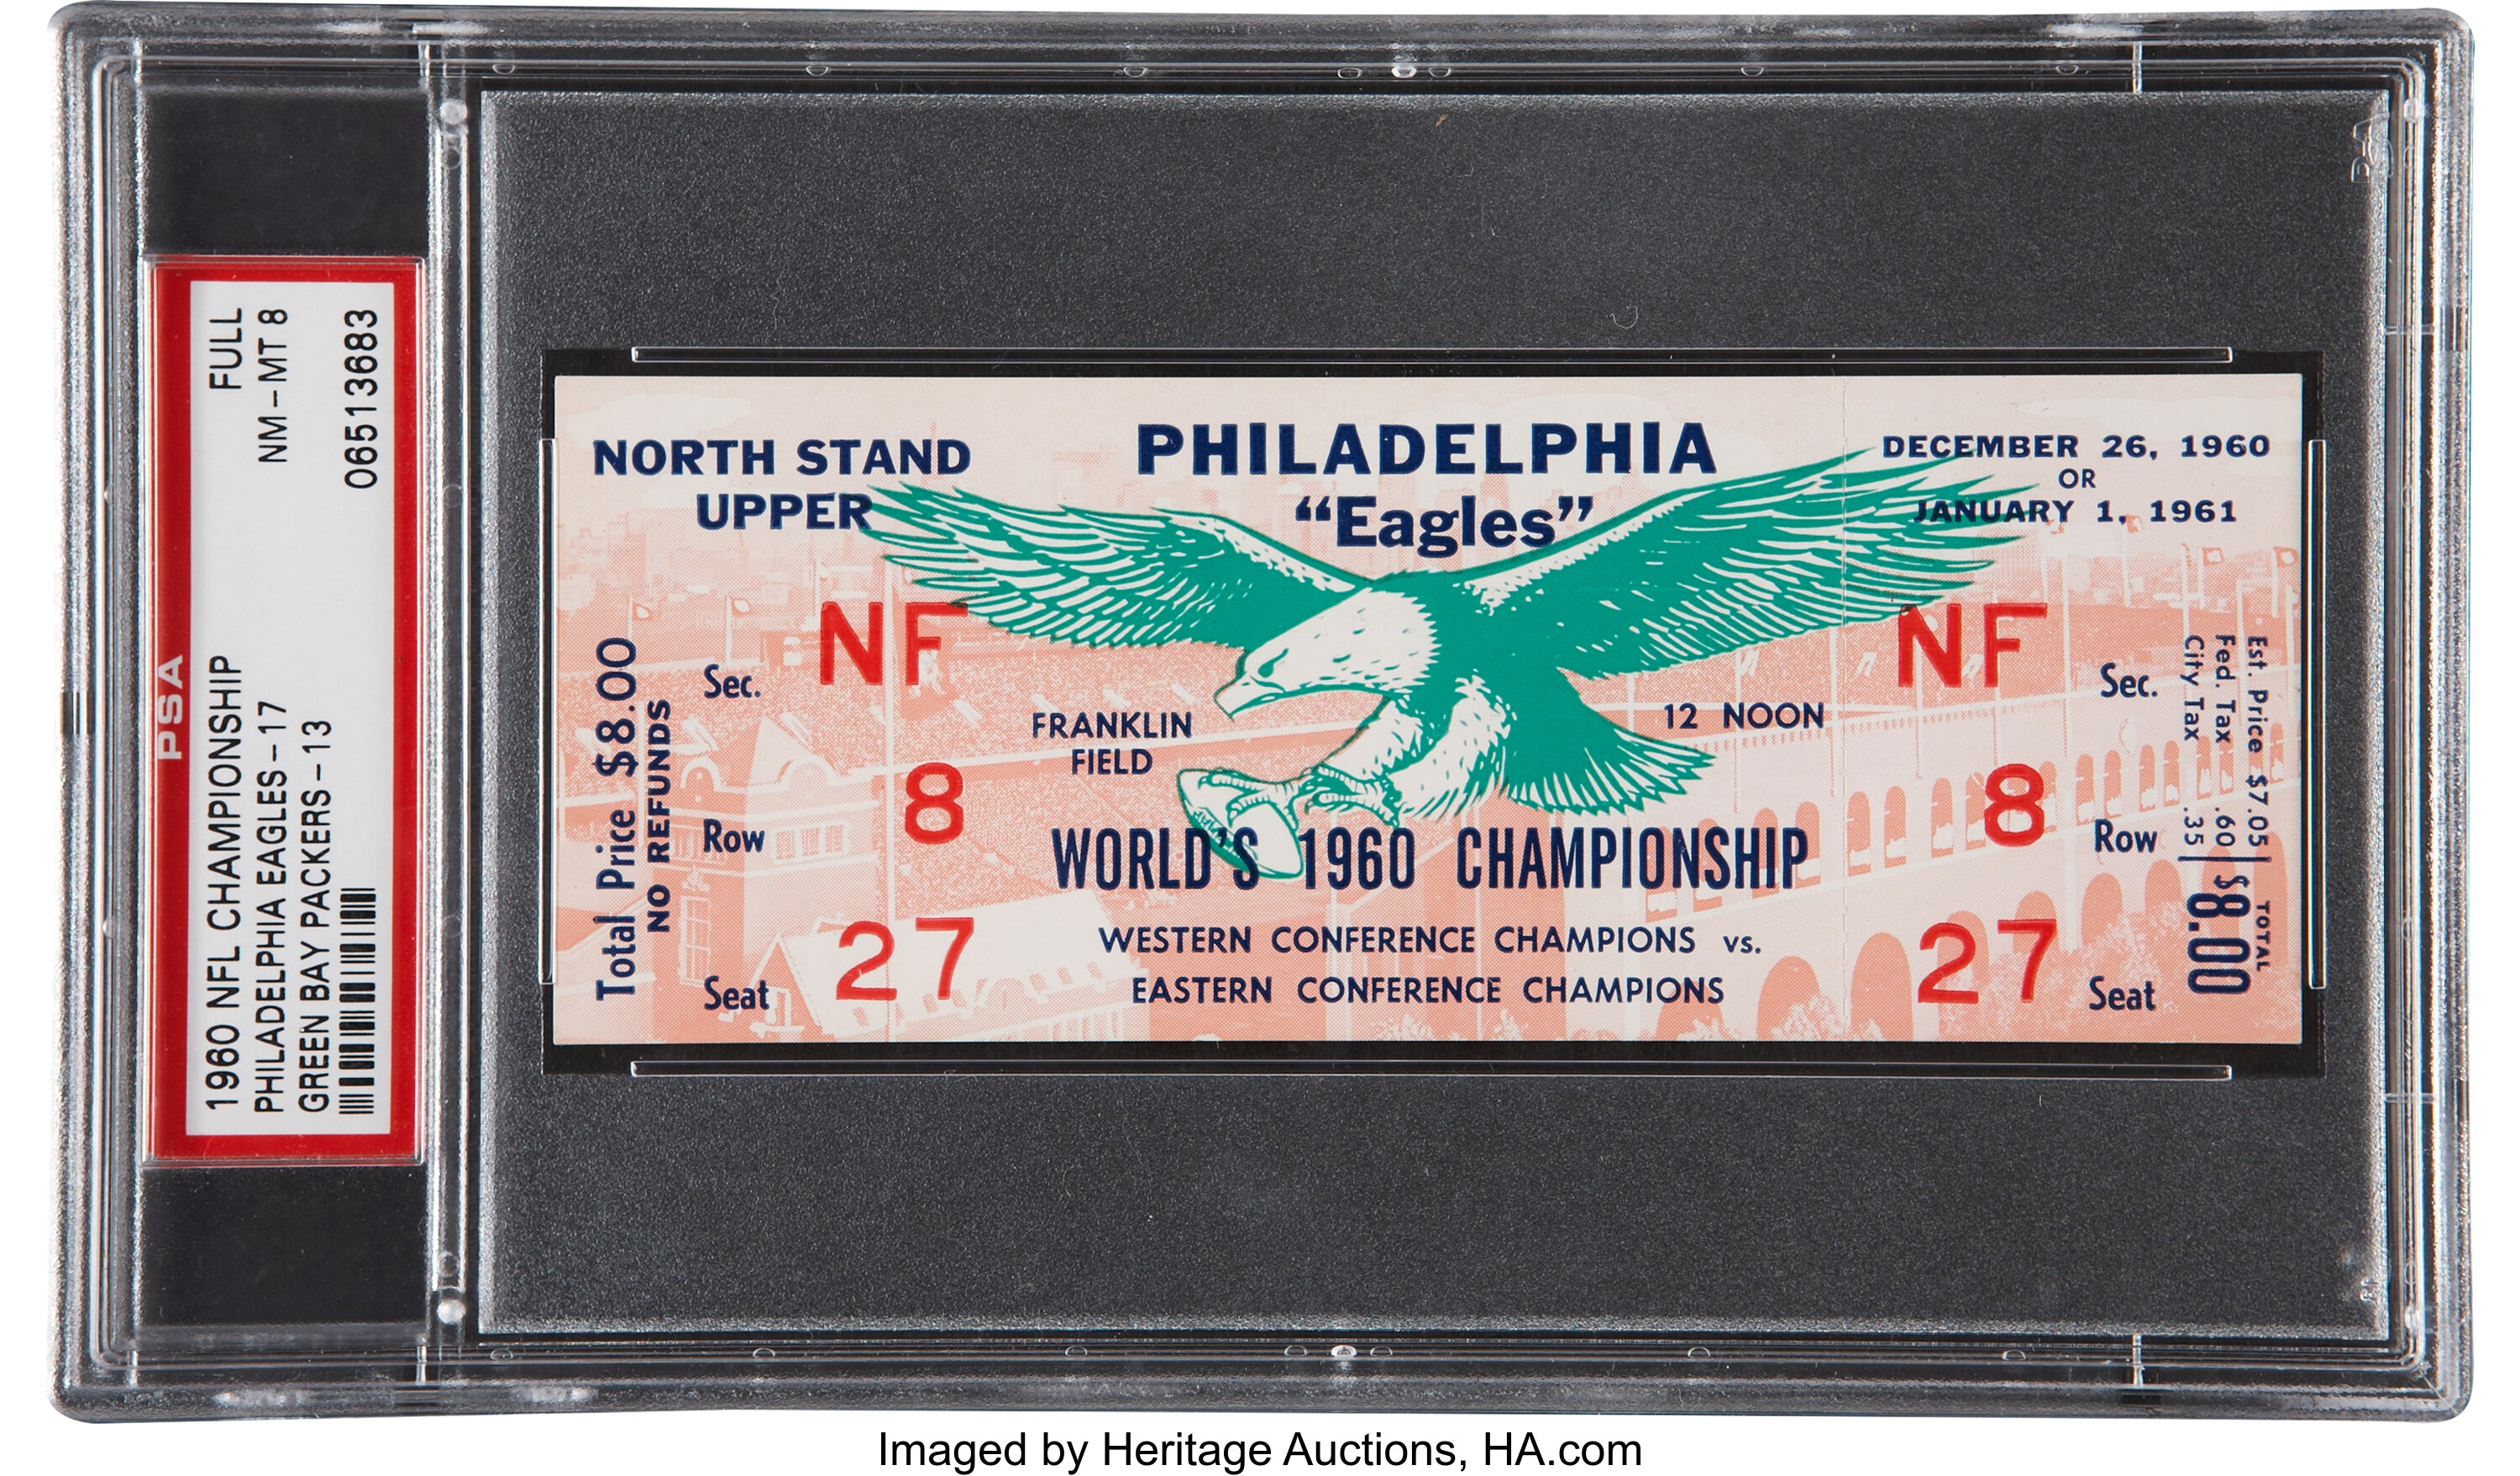 Philadelphia Eagles Tickets - Philadelphia Eagles Fixtures